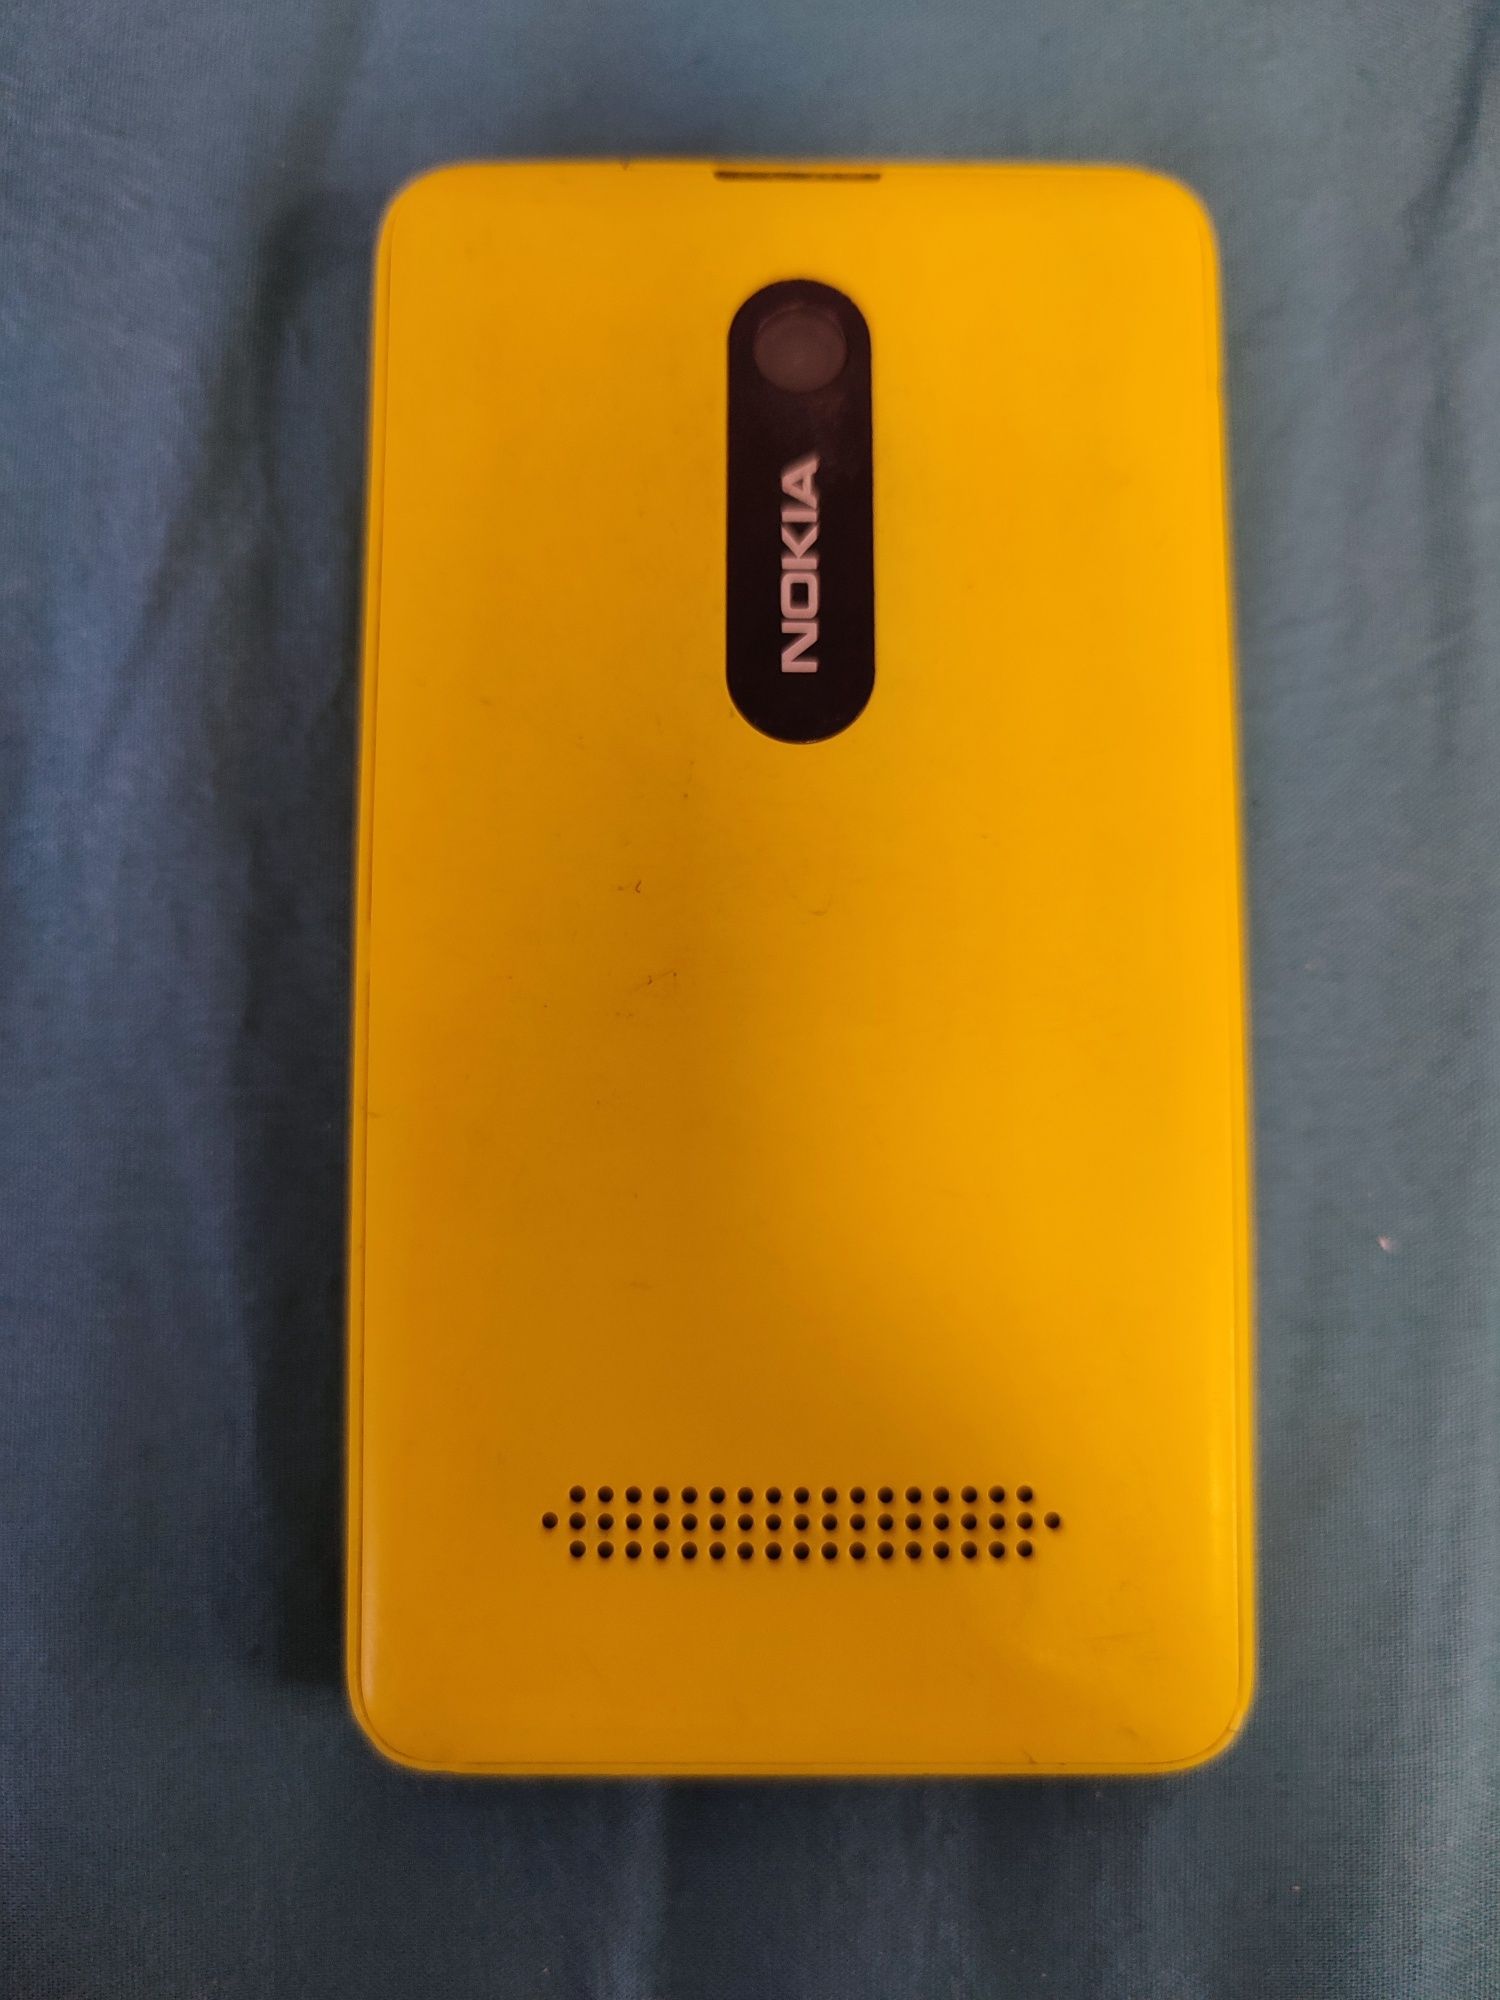 Nokia Asha 210.2 colecție